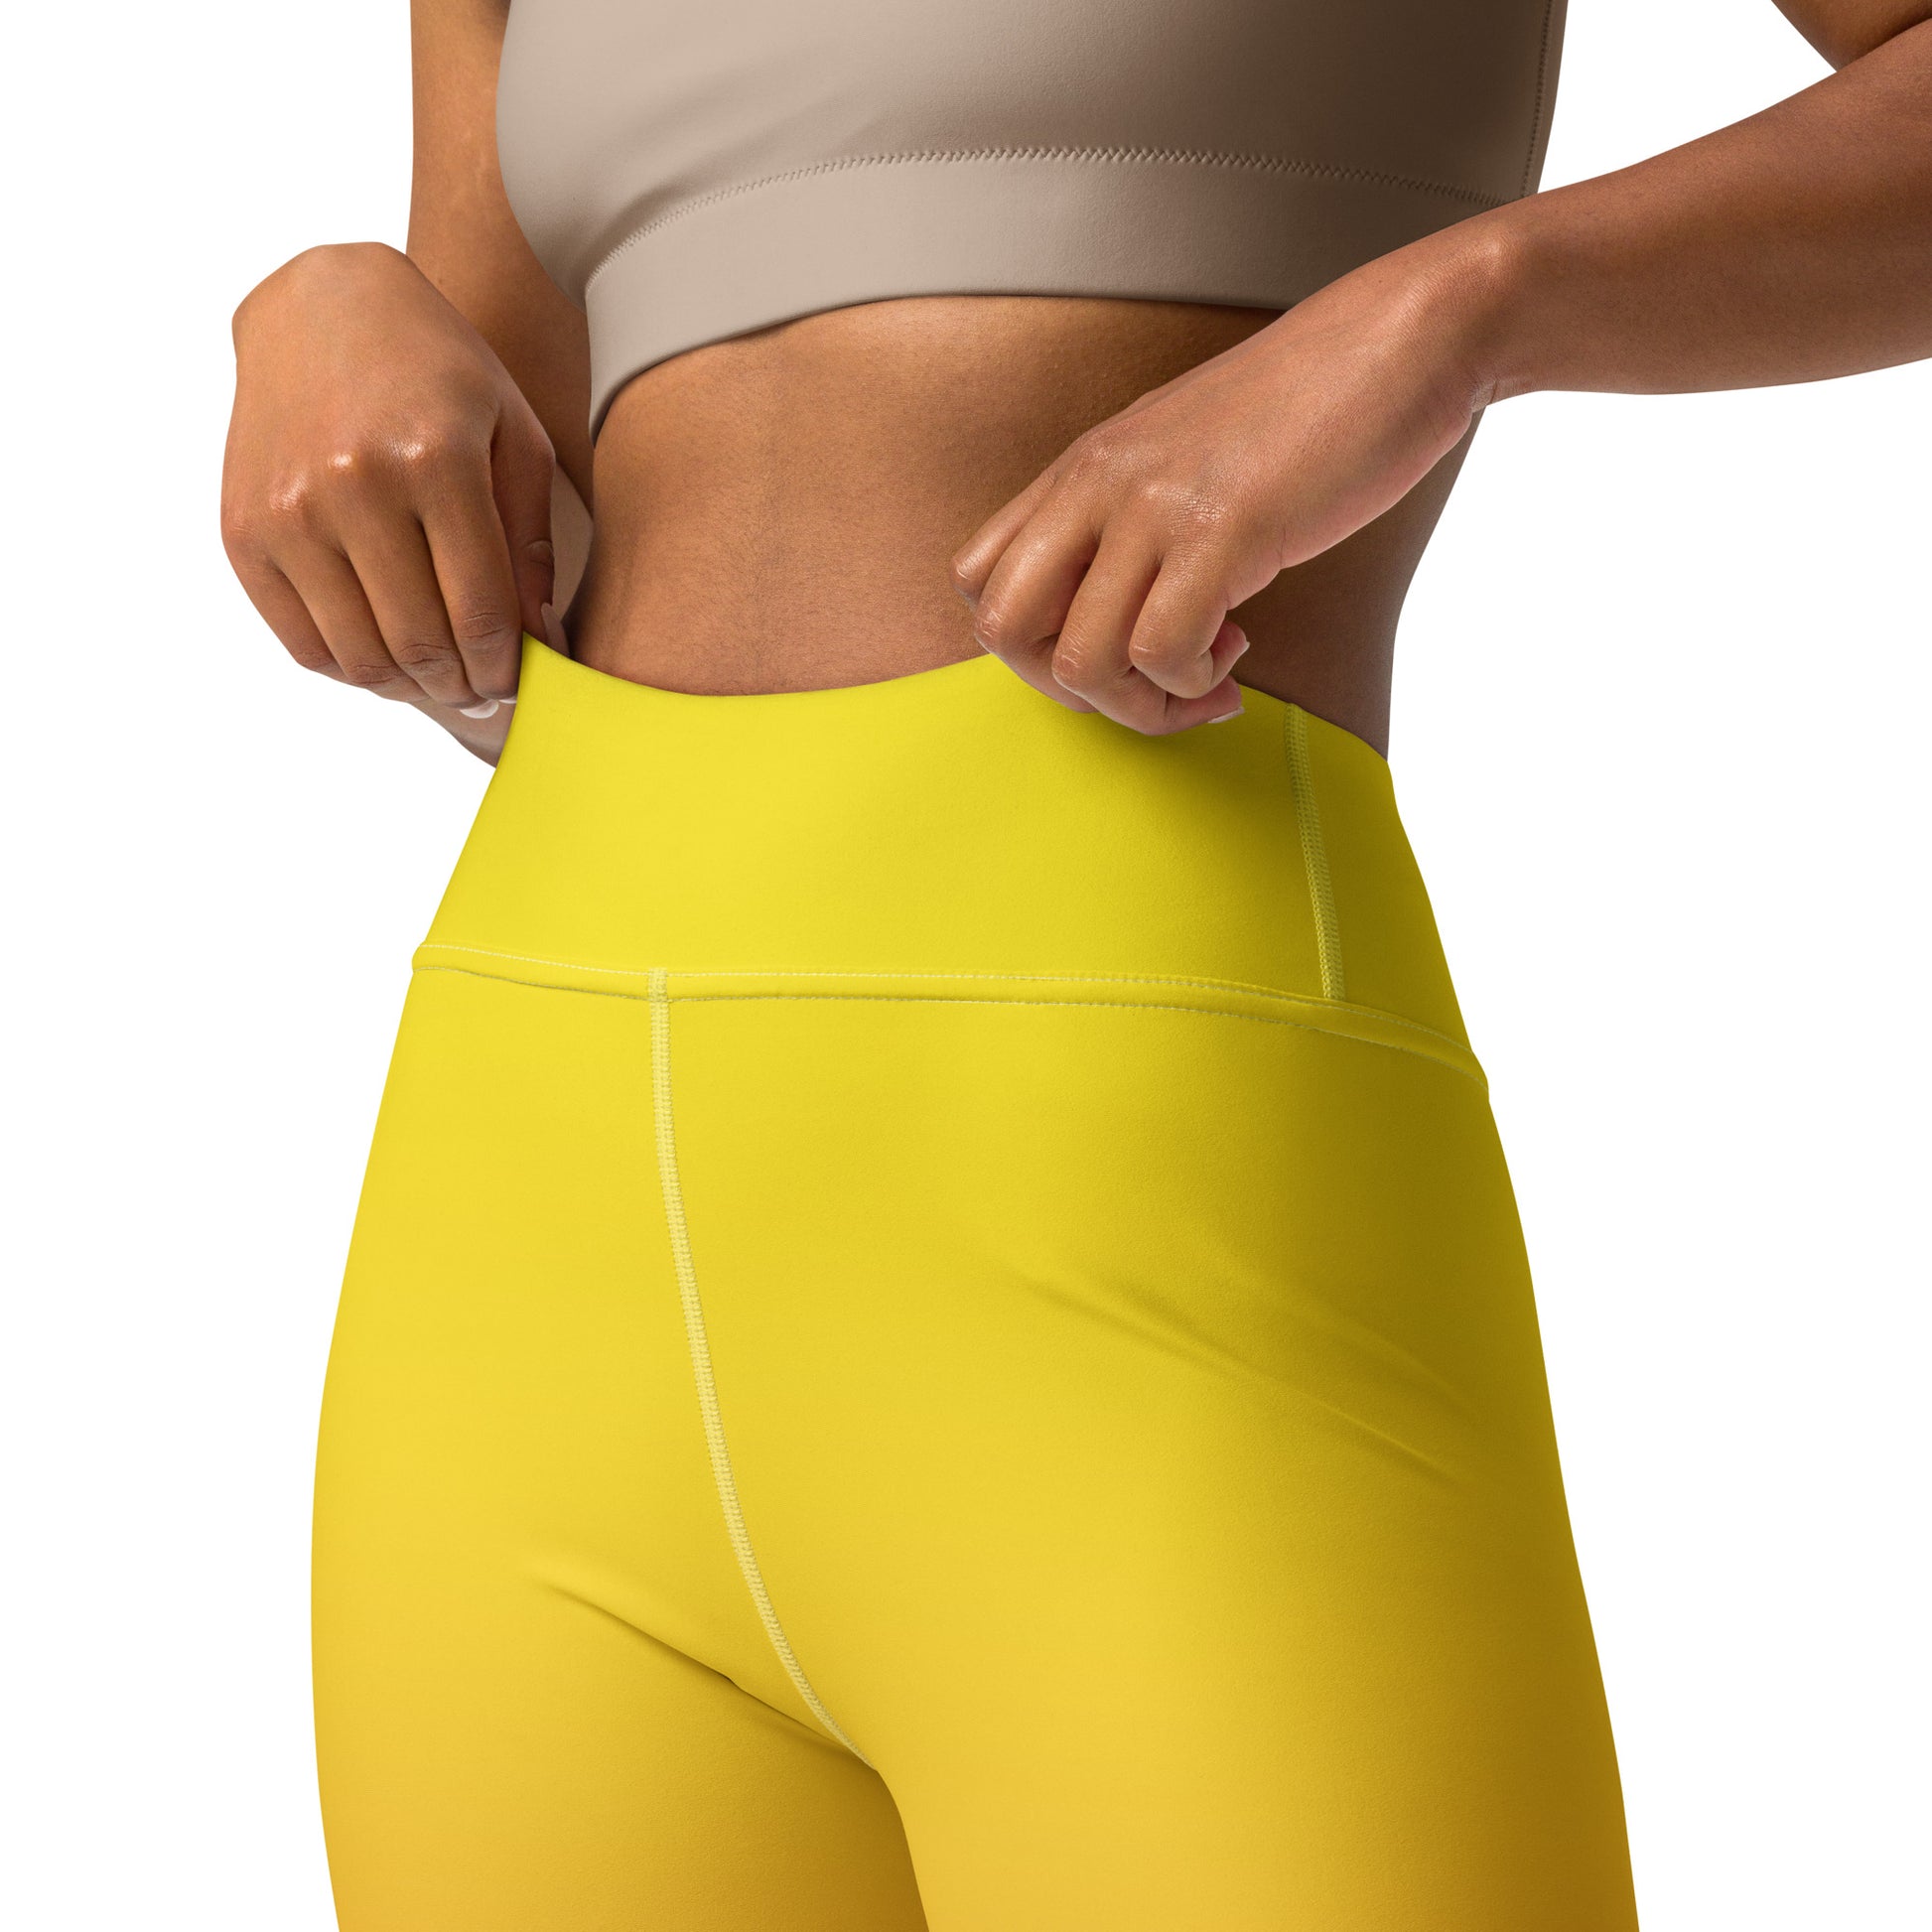 The Lemon Yoga Leggings: Yellow Yoga Leggings– MomQueenBoutique